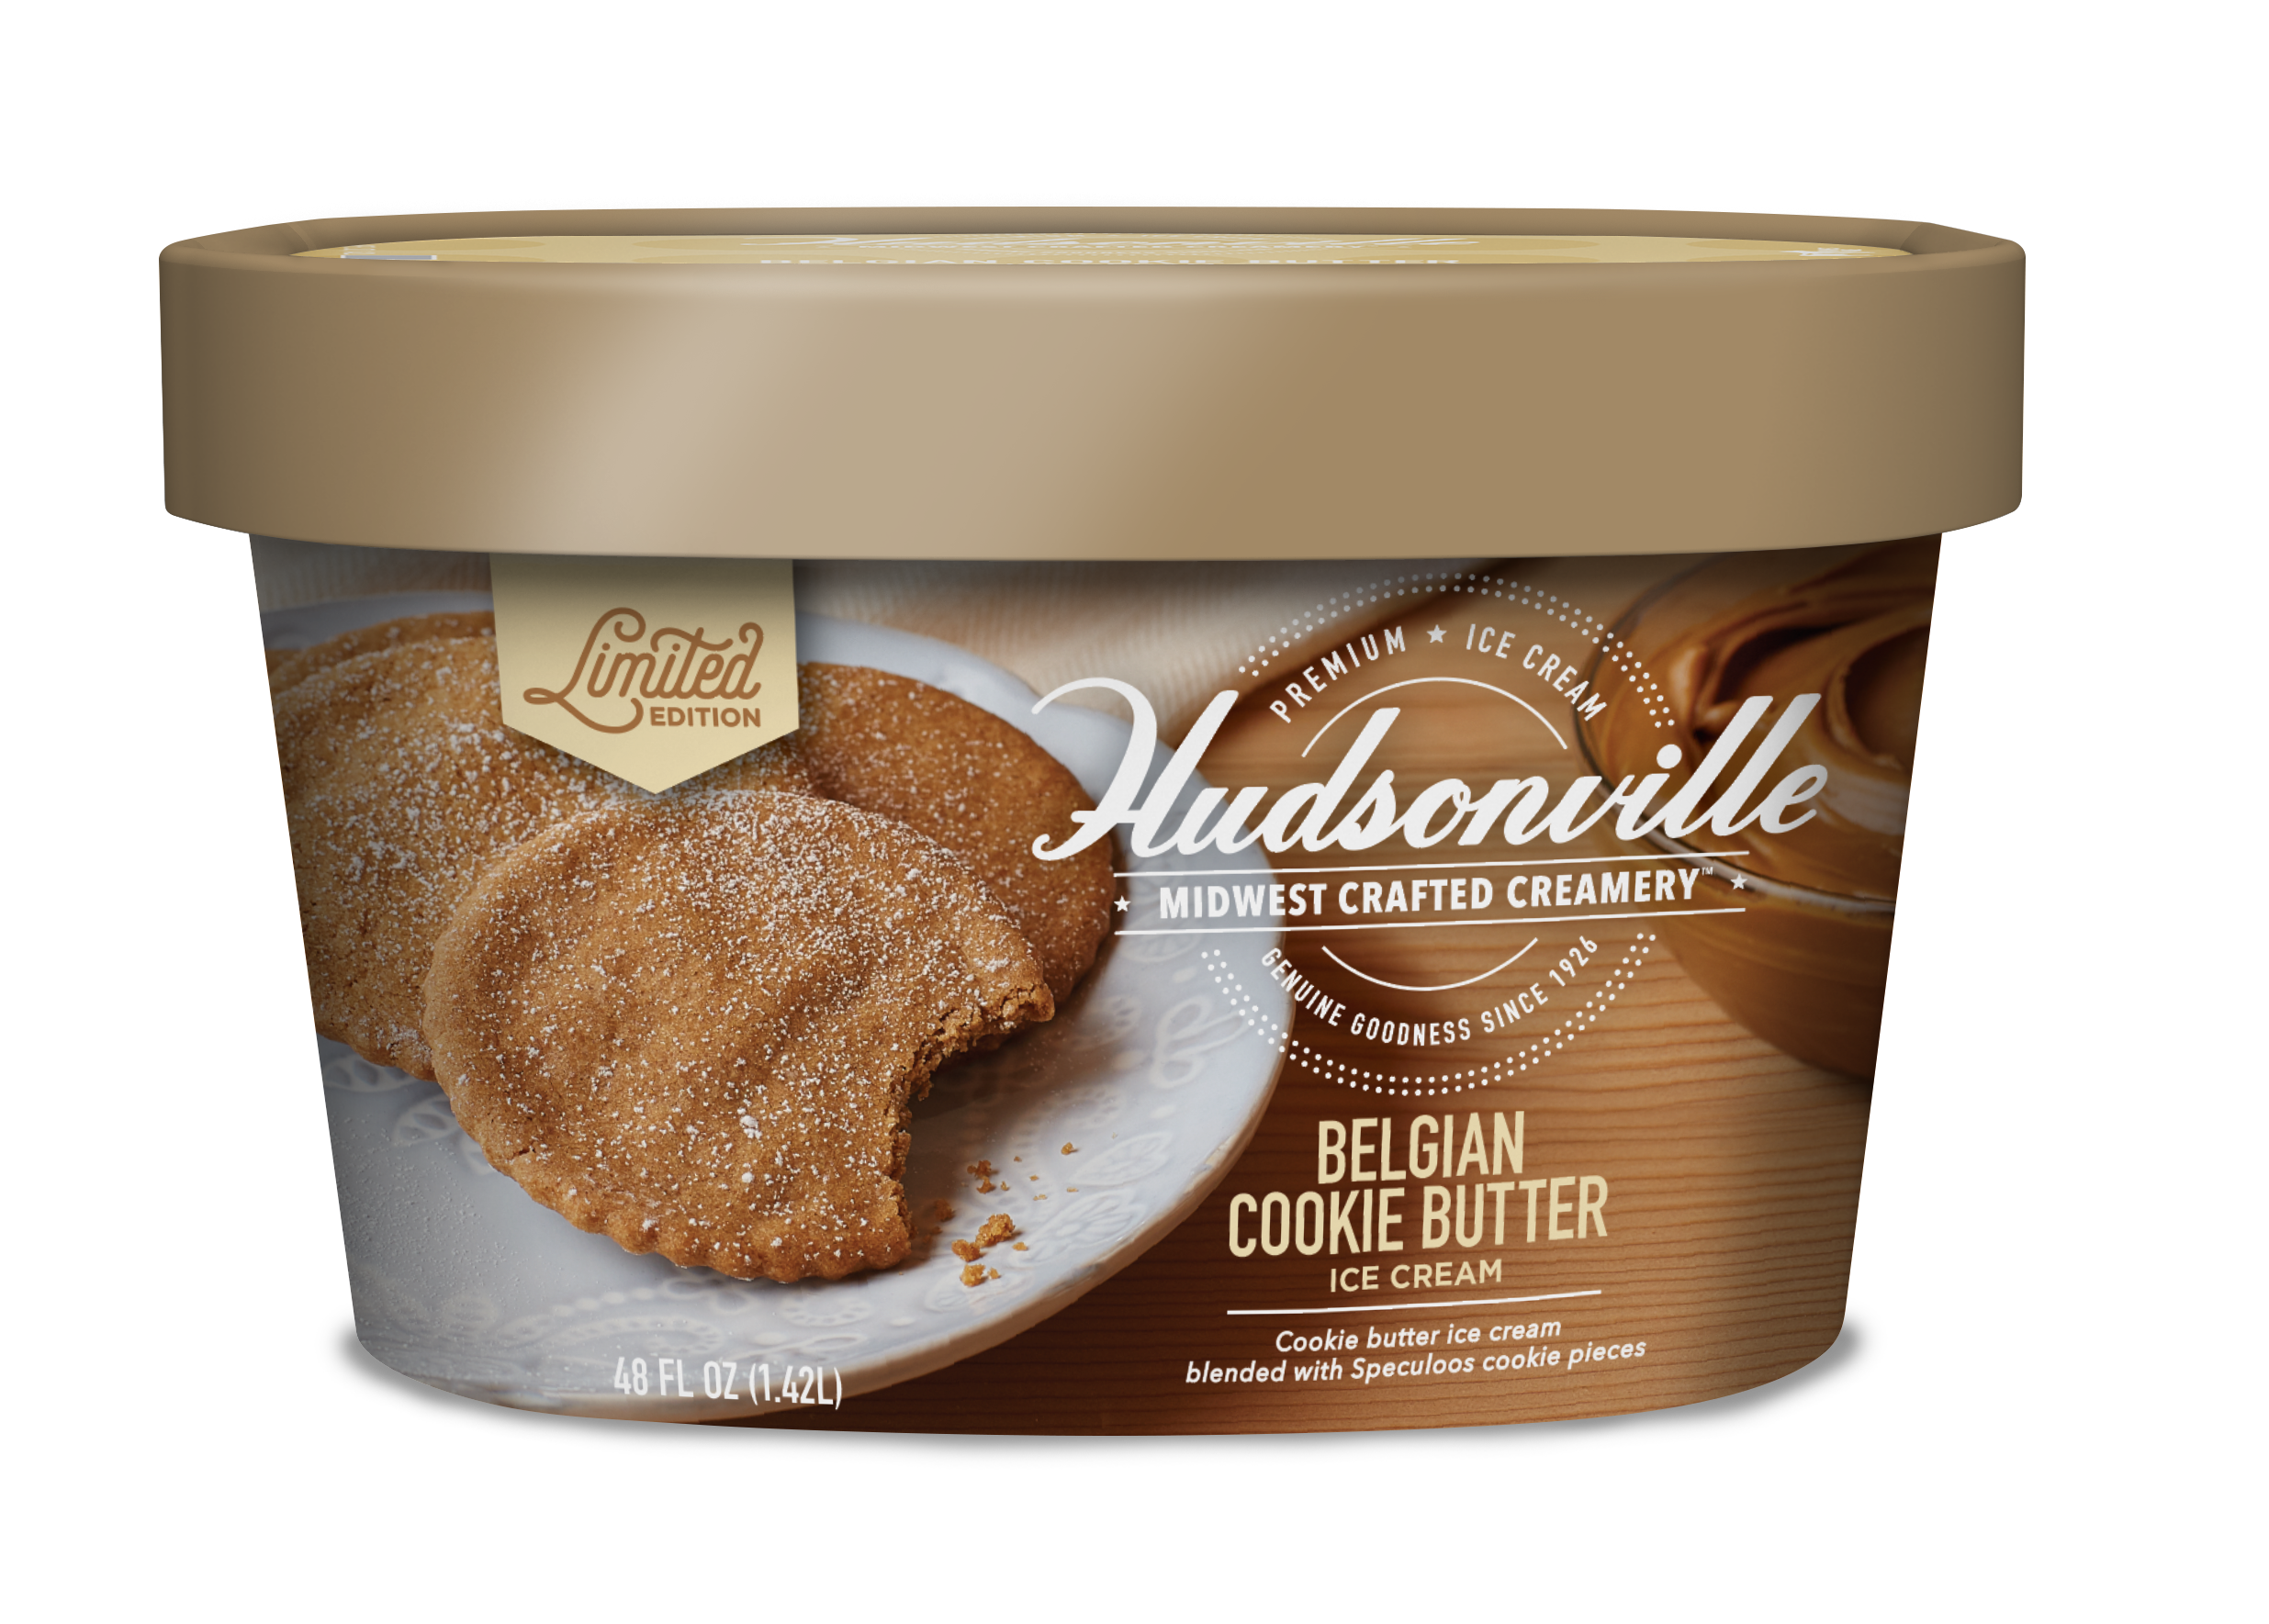 Hudsonville Ice Cream: Belgian Cookie Butter